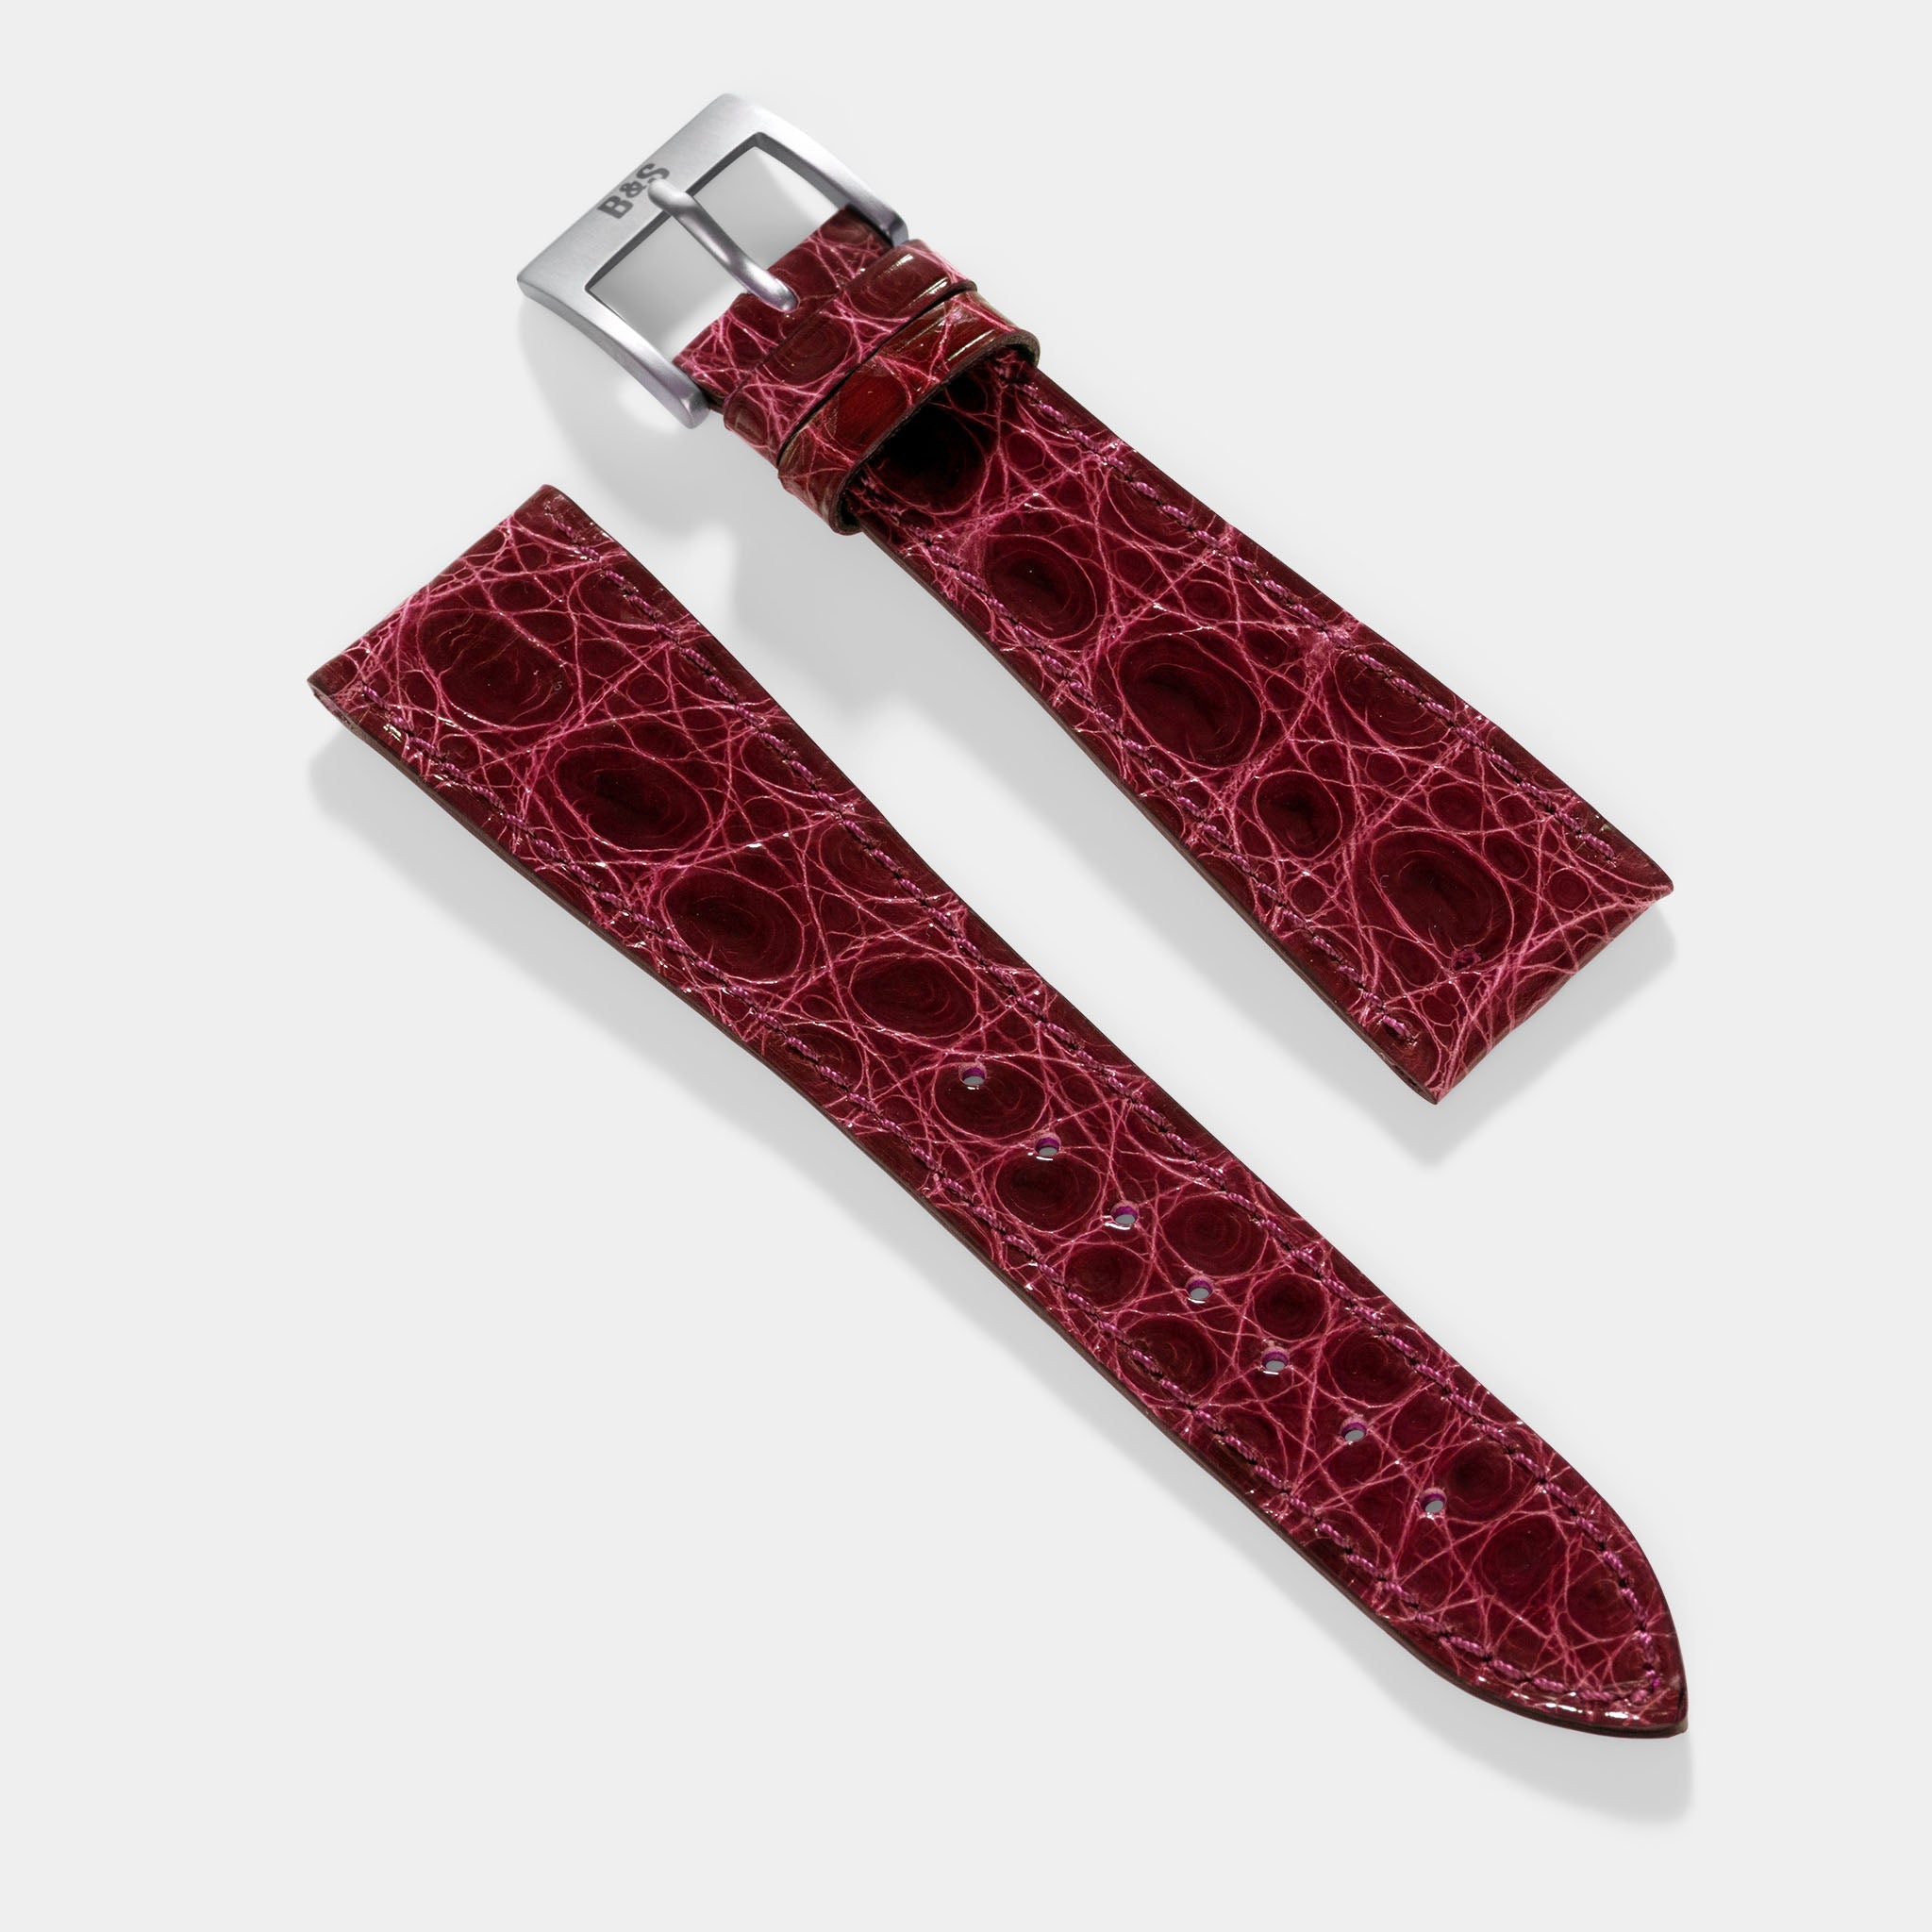 Brilliant Bordeaux Alligator Leather Watch Strap